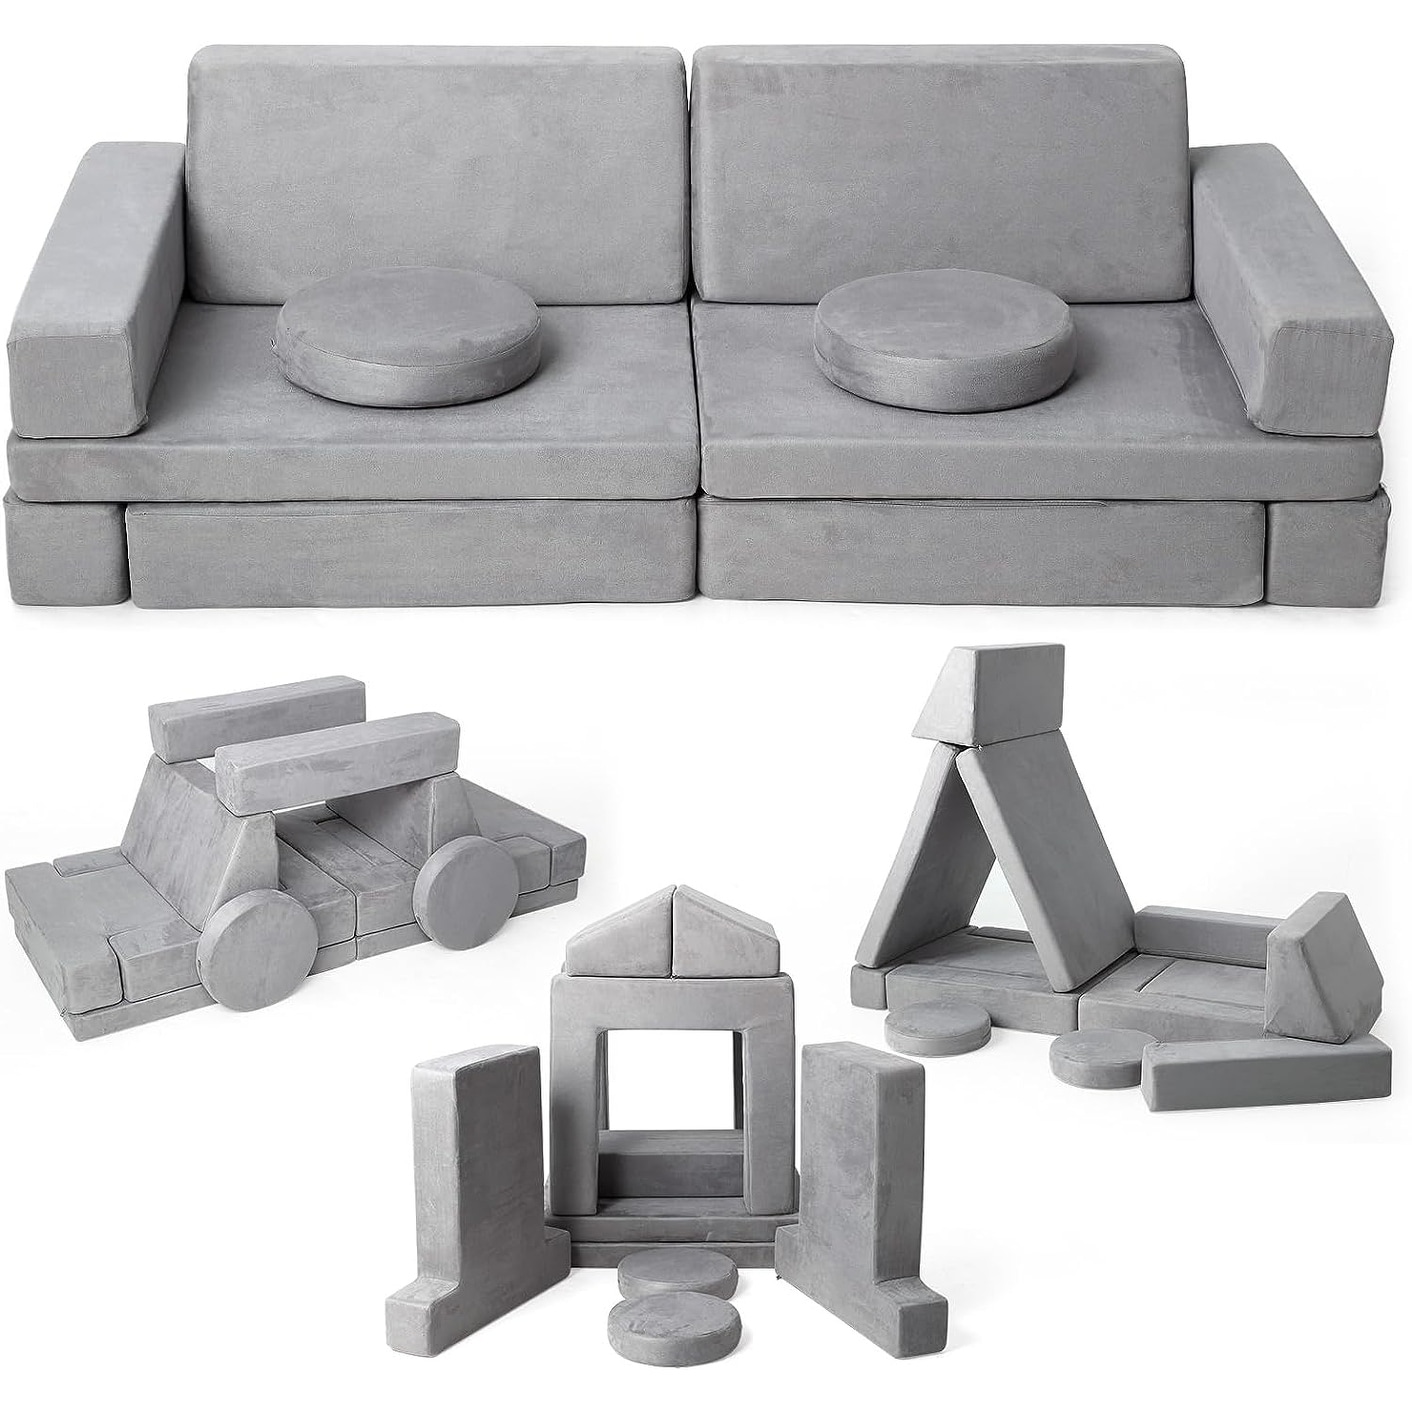 Modular Kids Couch For Toddler Playroom  Bedroom Imaginative Furniture  Kids Sofa